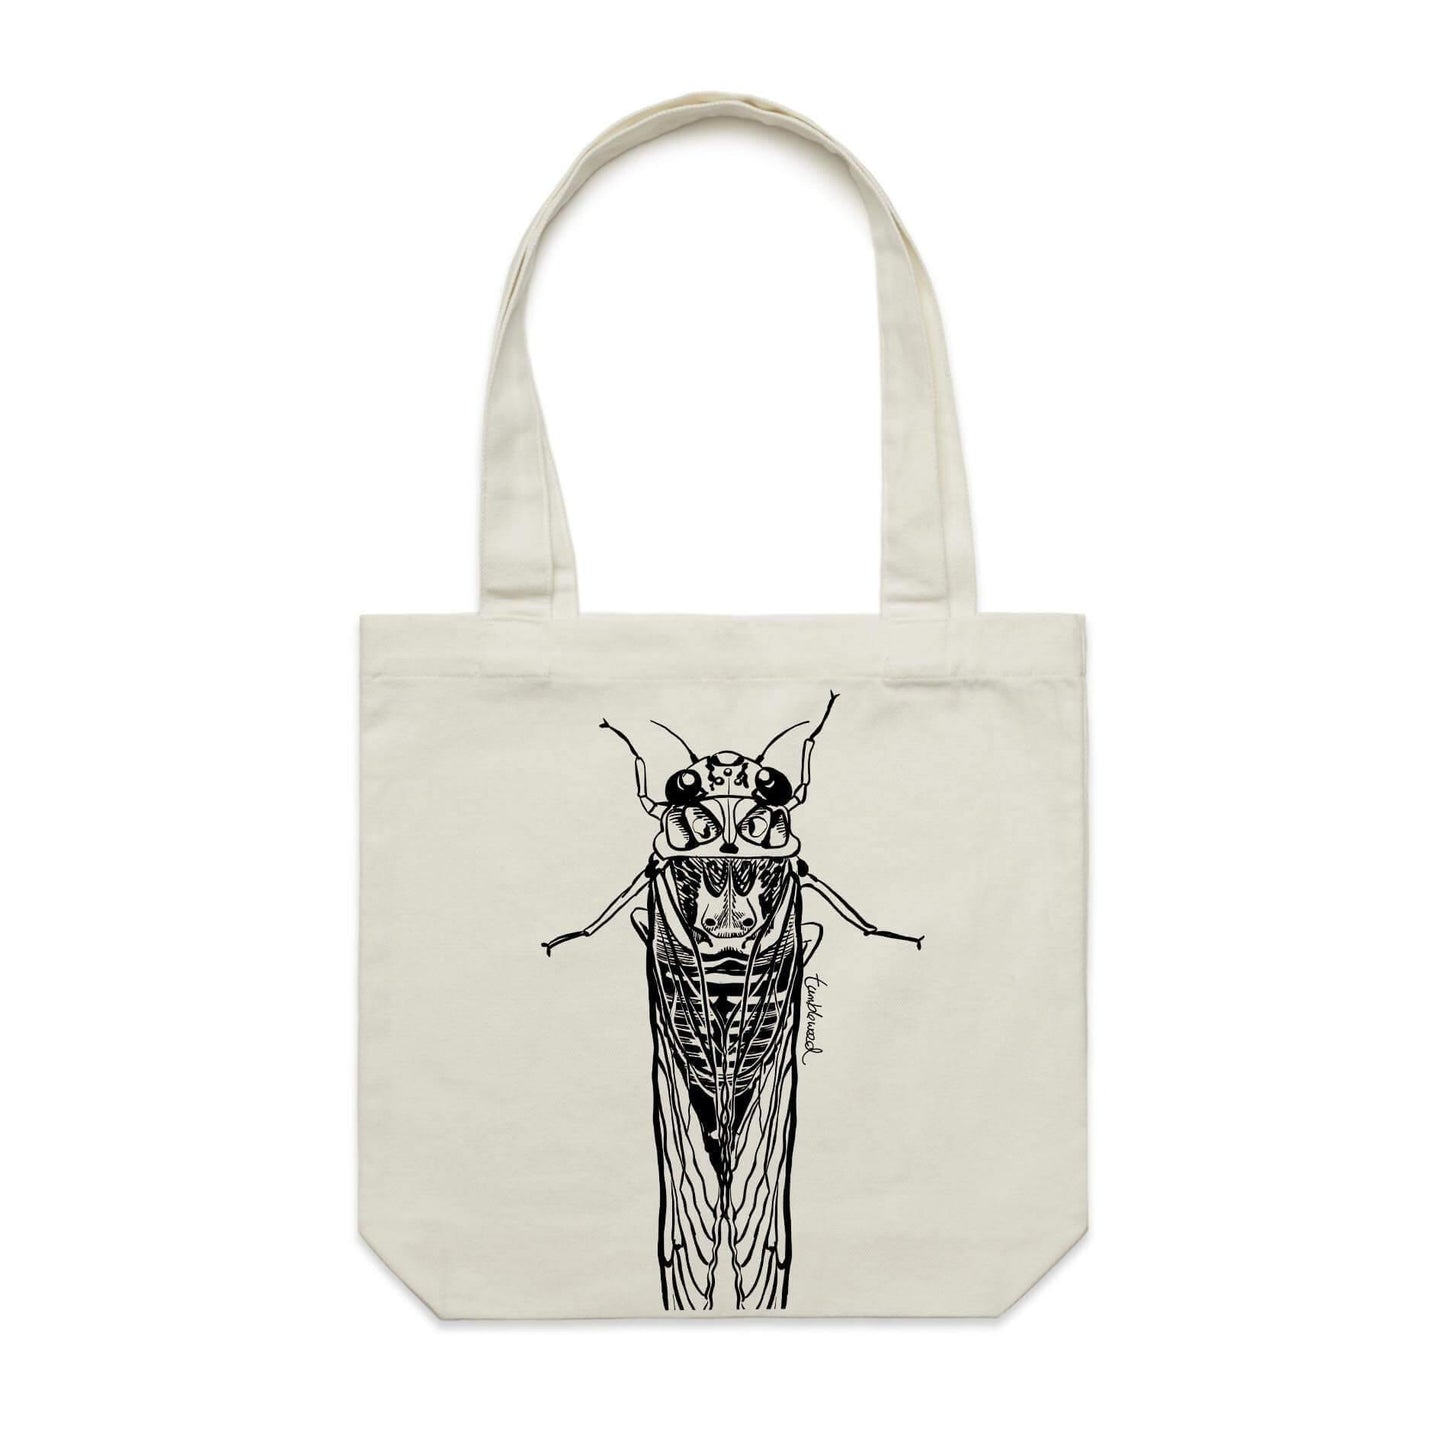 Cotton canvas tote bag with a screen printed Cicada/kihikihi-wawā design.